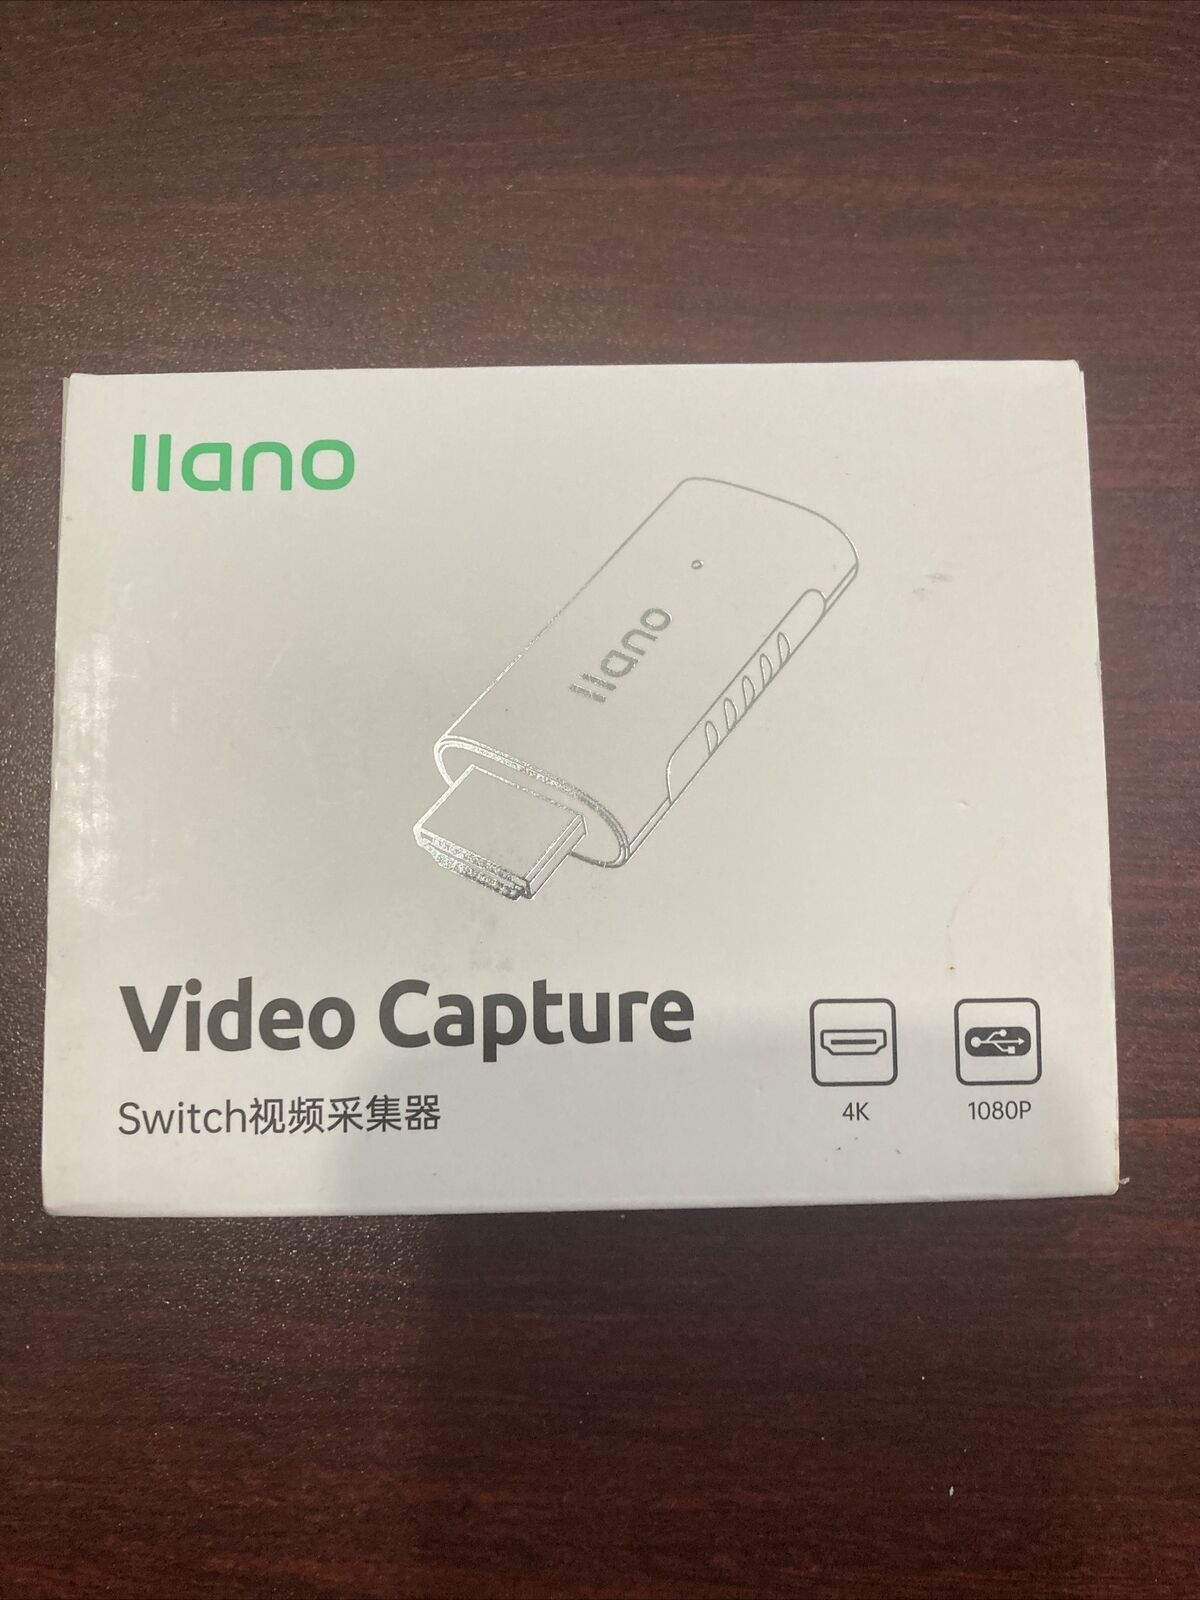 Llano Nintendo Switch  Capture Card - New in box -